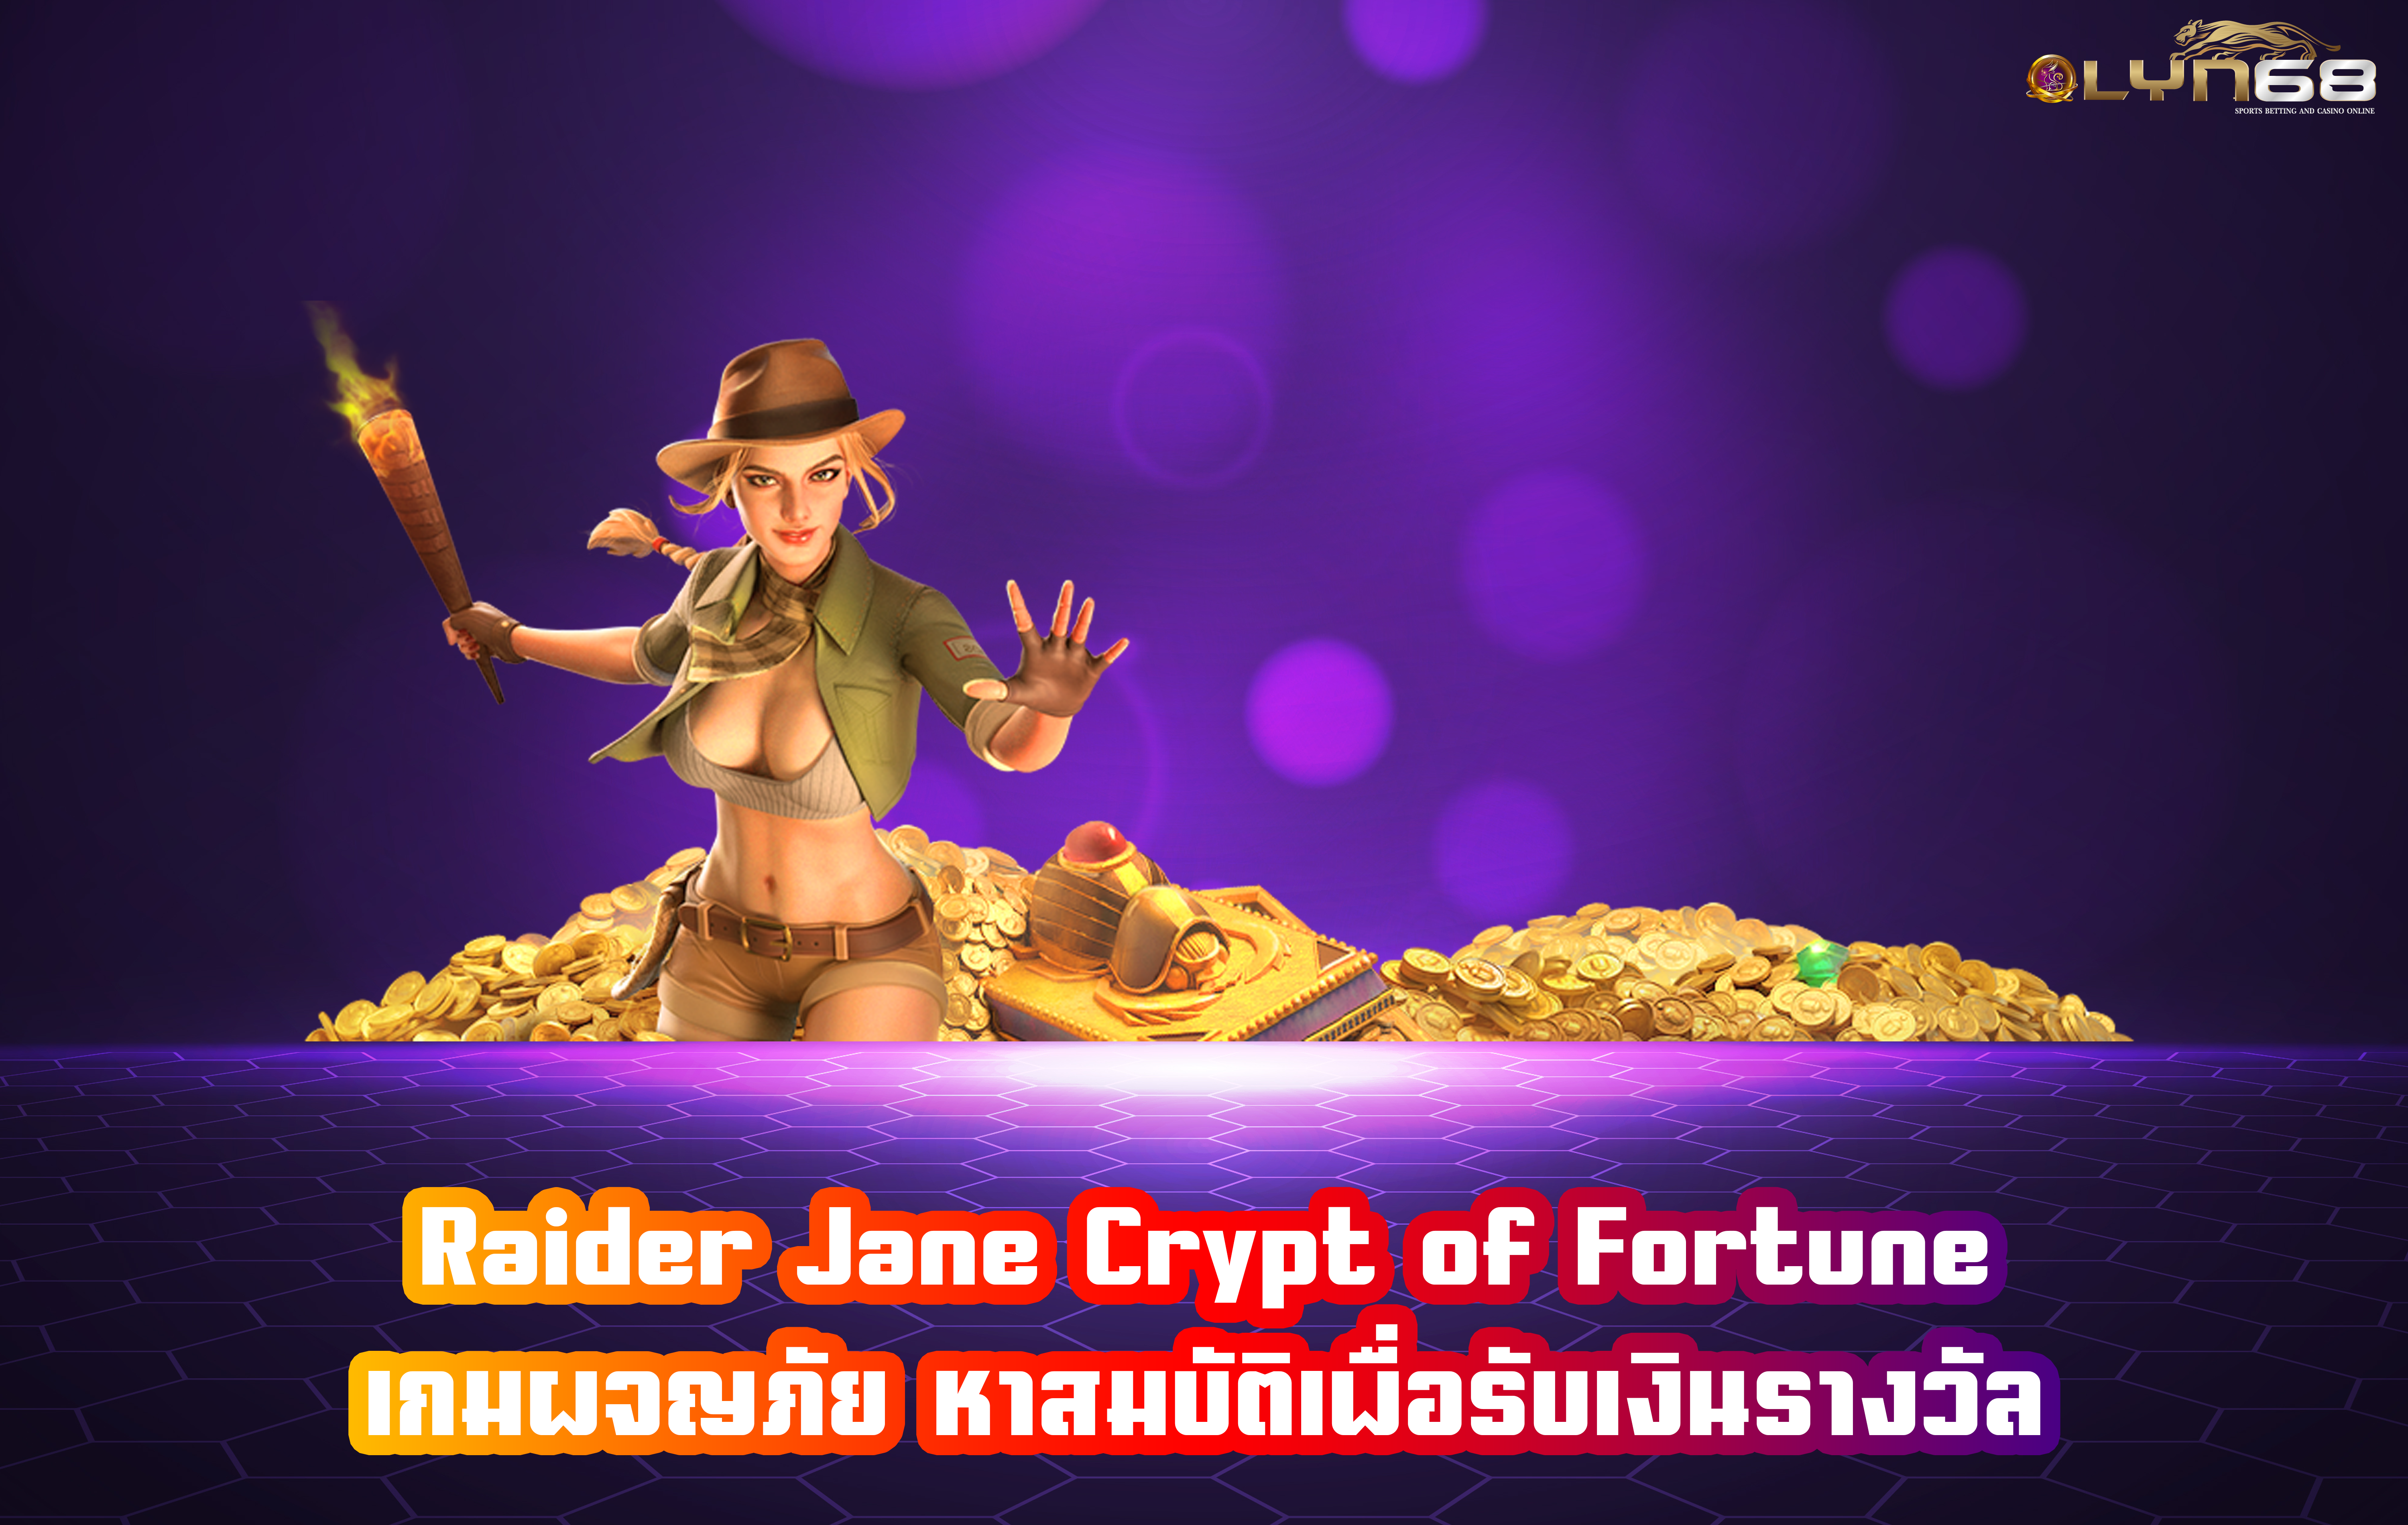 Raider Jane Crypt of Fortune เกมผจญภัย หาสมบัติเพื่อรับเงินรางวัล